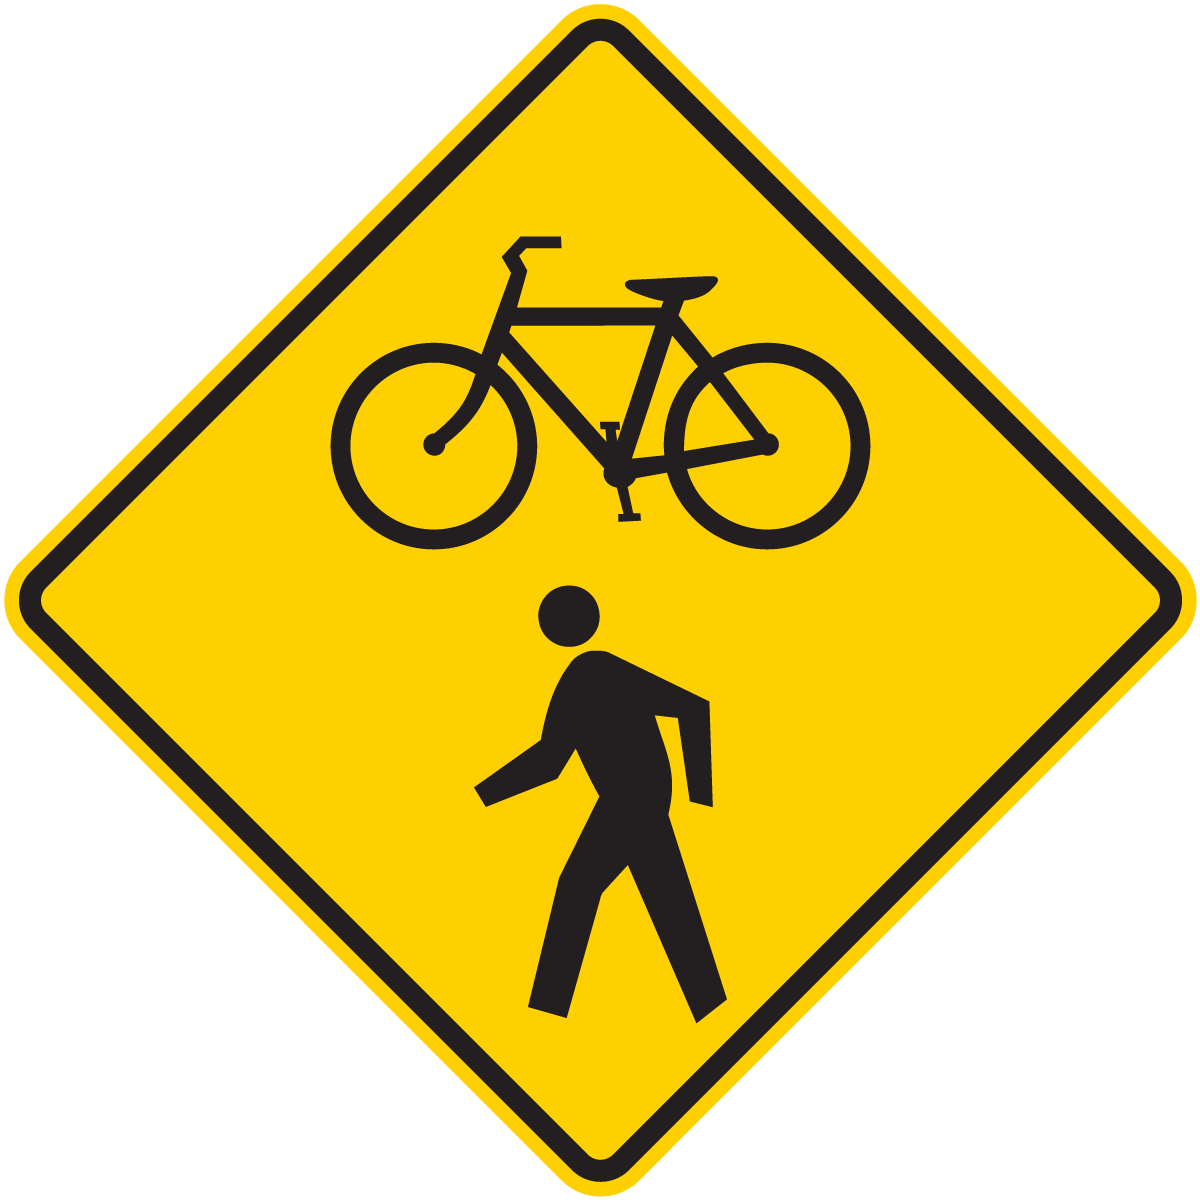 W11-15 Bicycle & Pedestrian